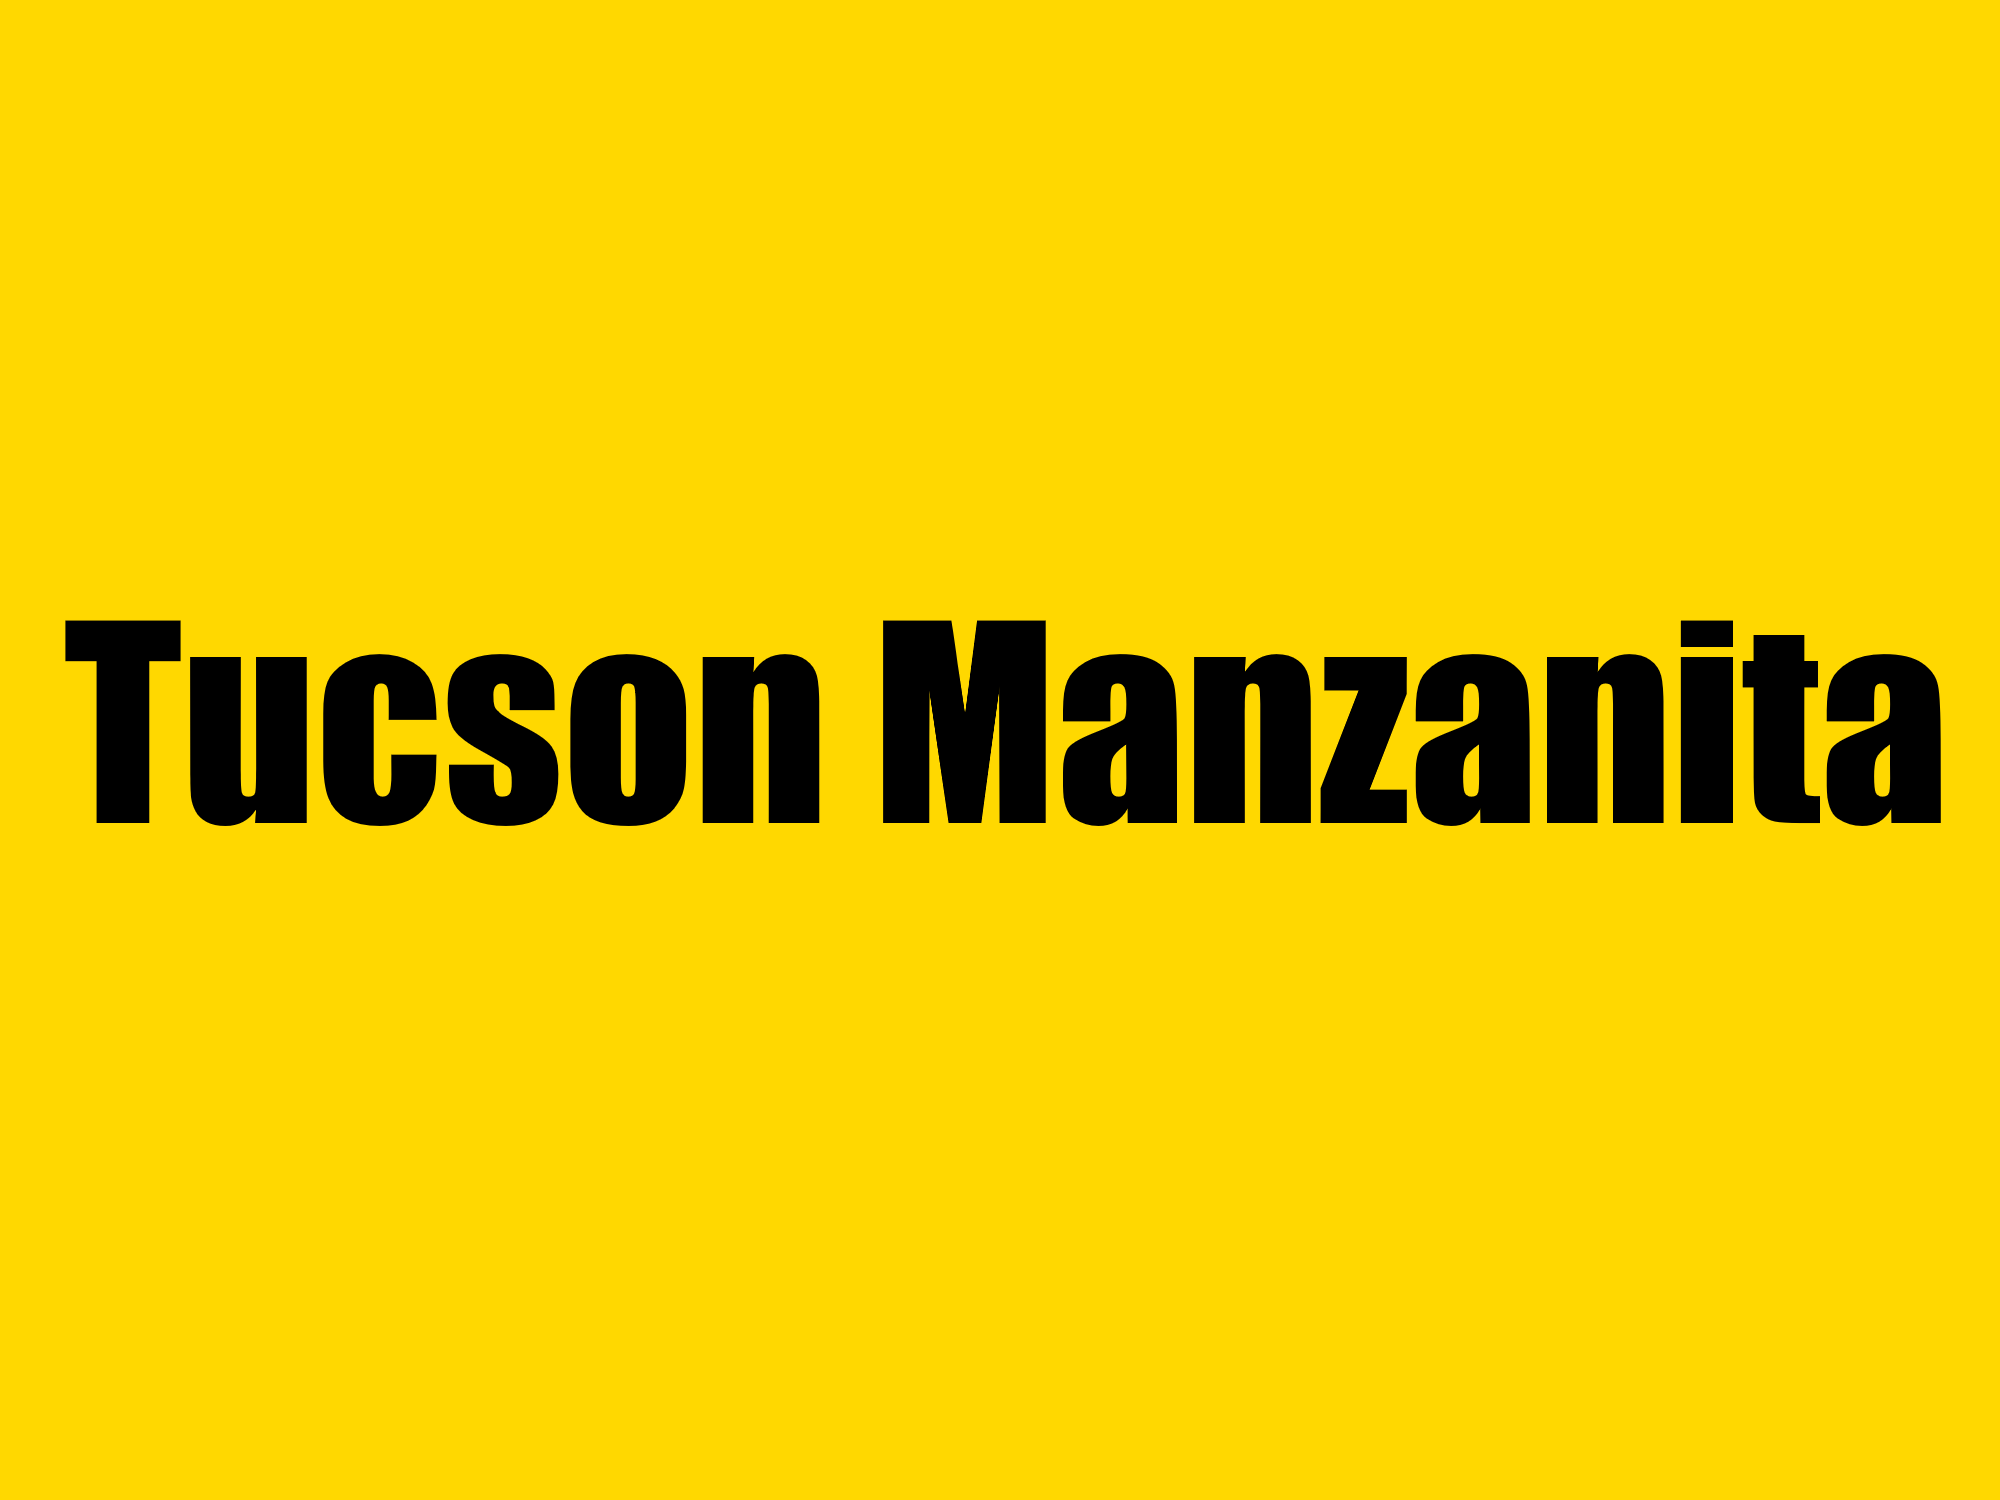 Tucson Manzanita